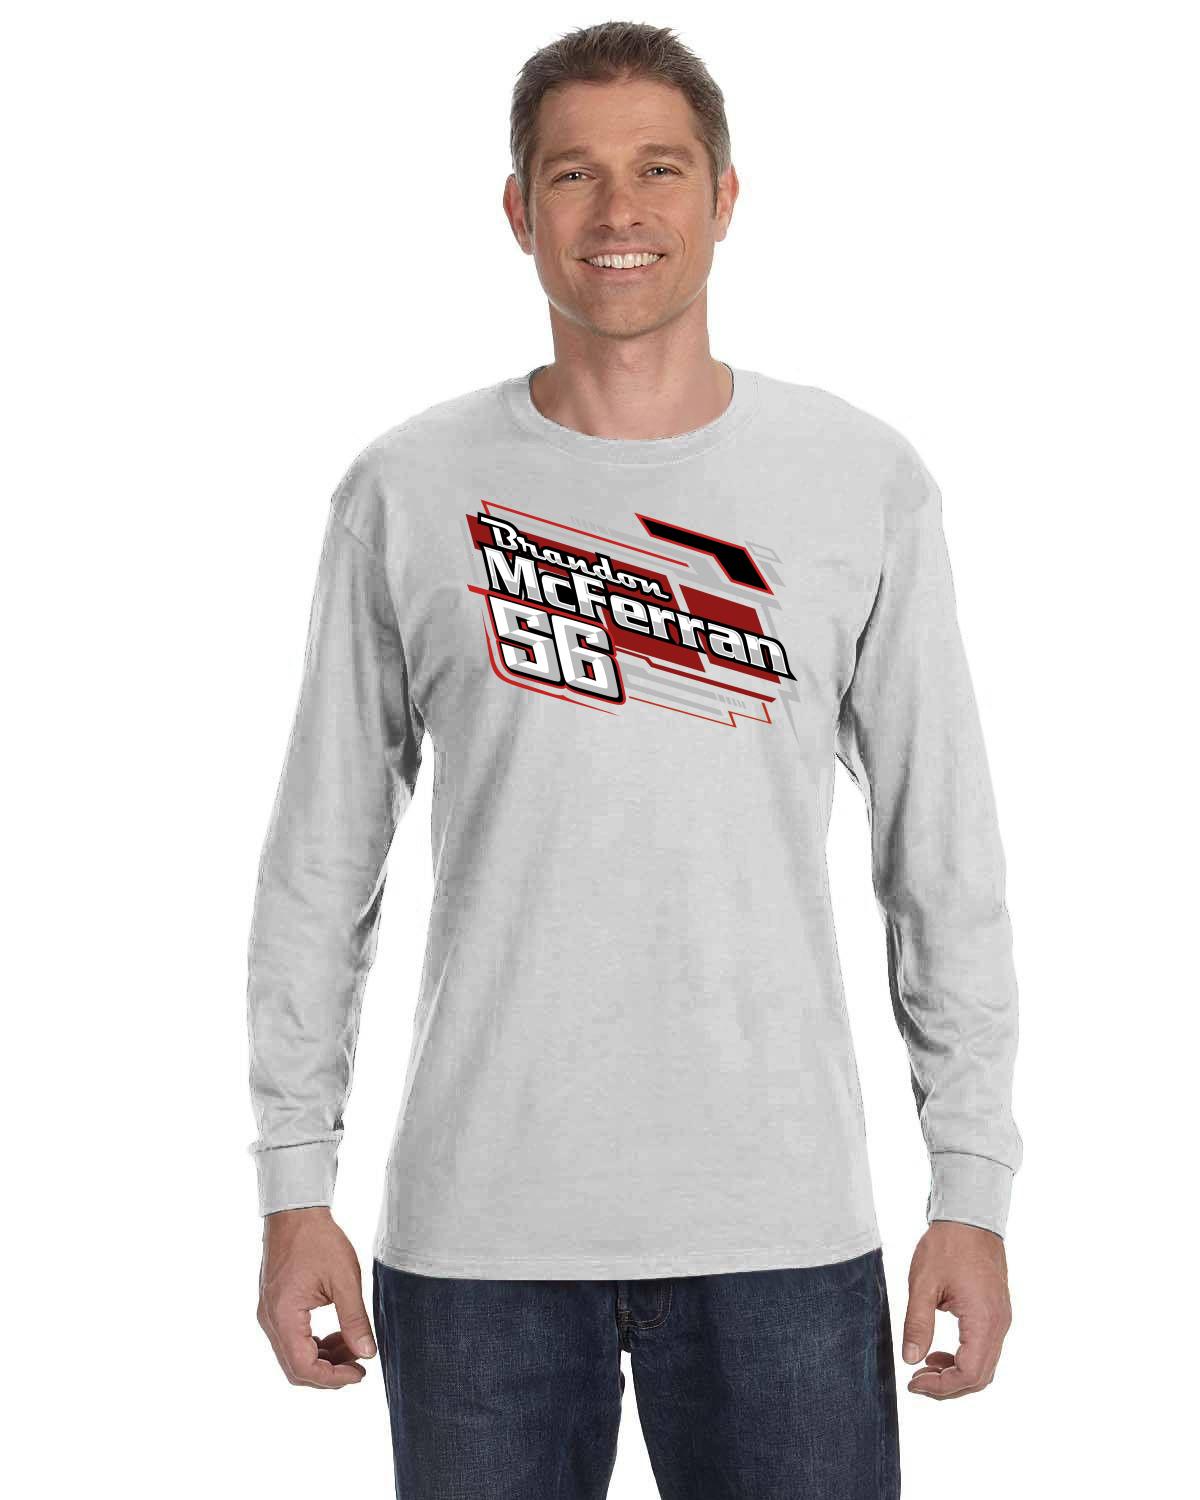 Brandon McFerran Racing Adult long sleeve shirt